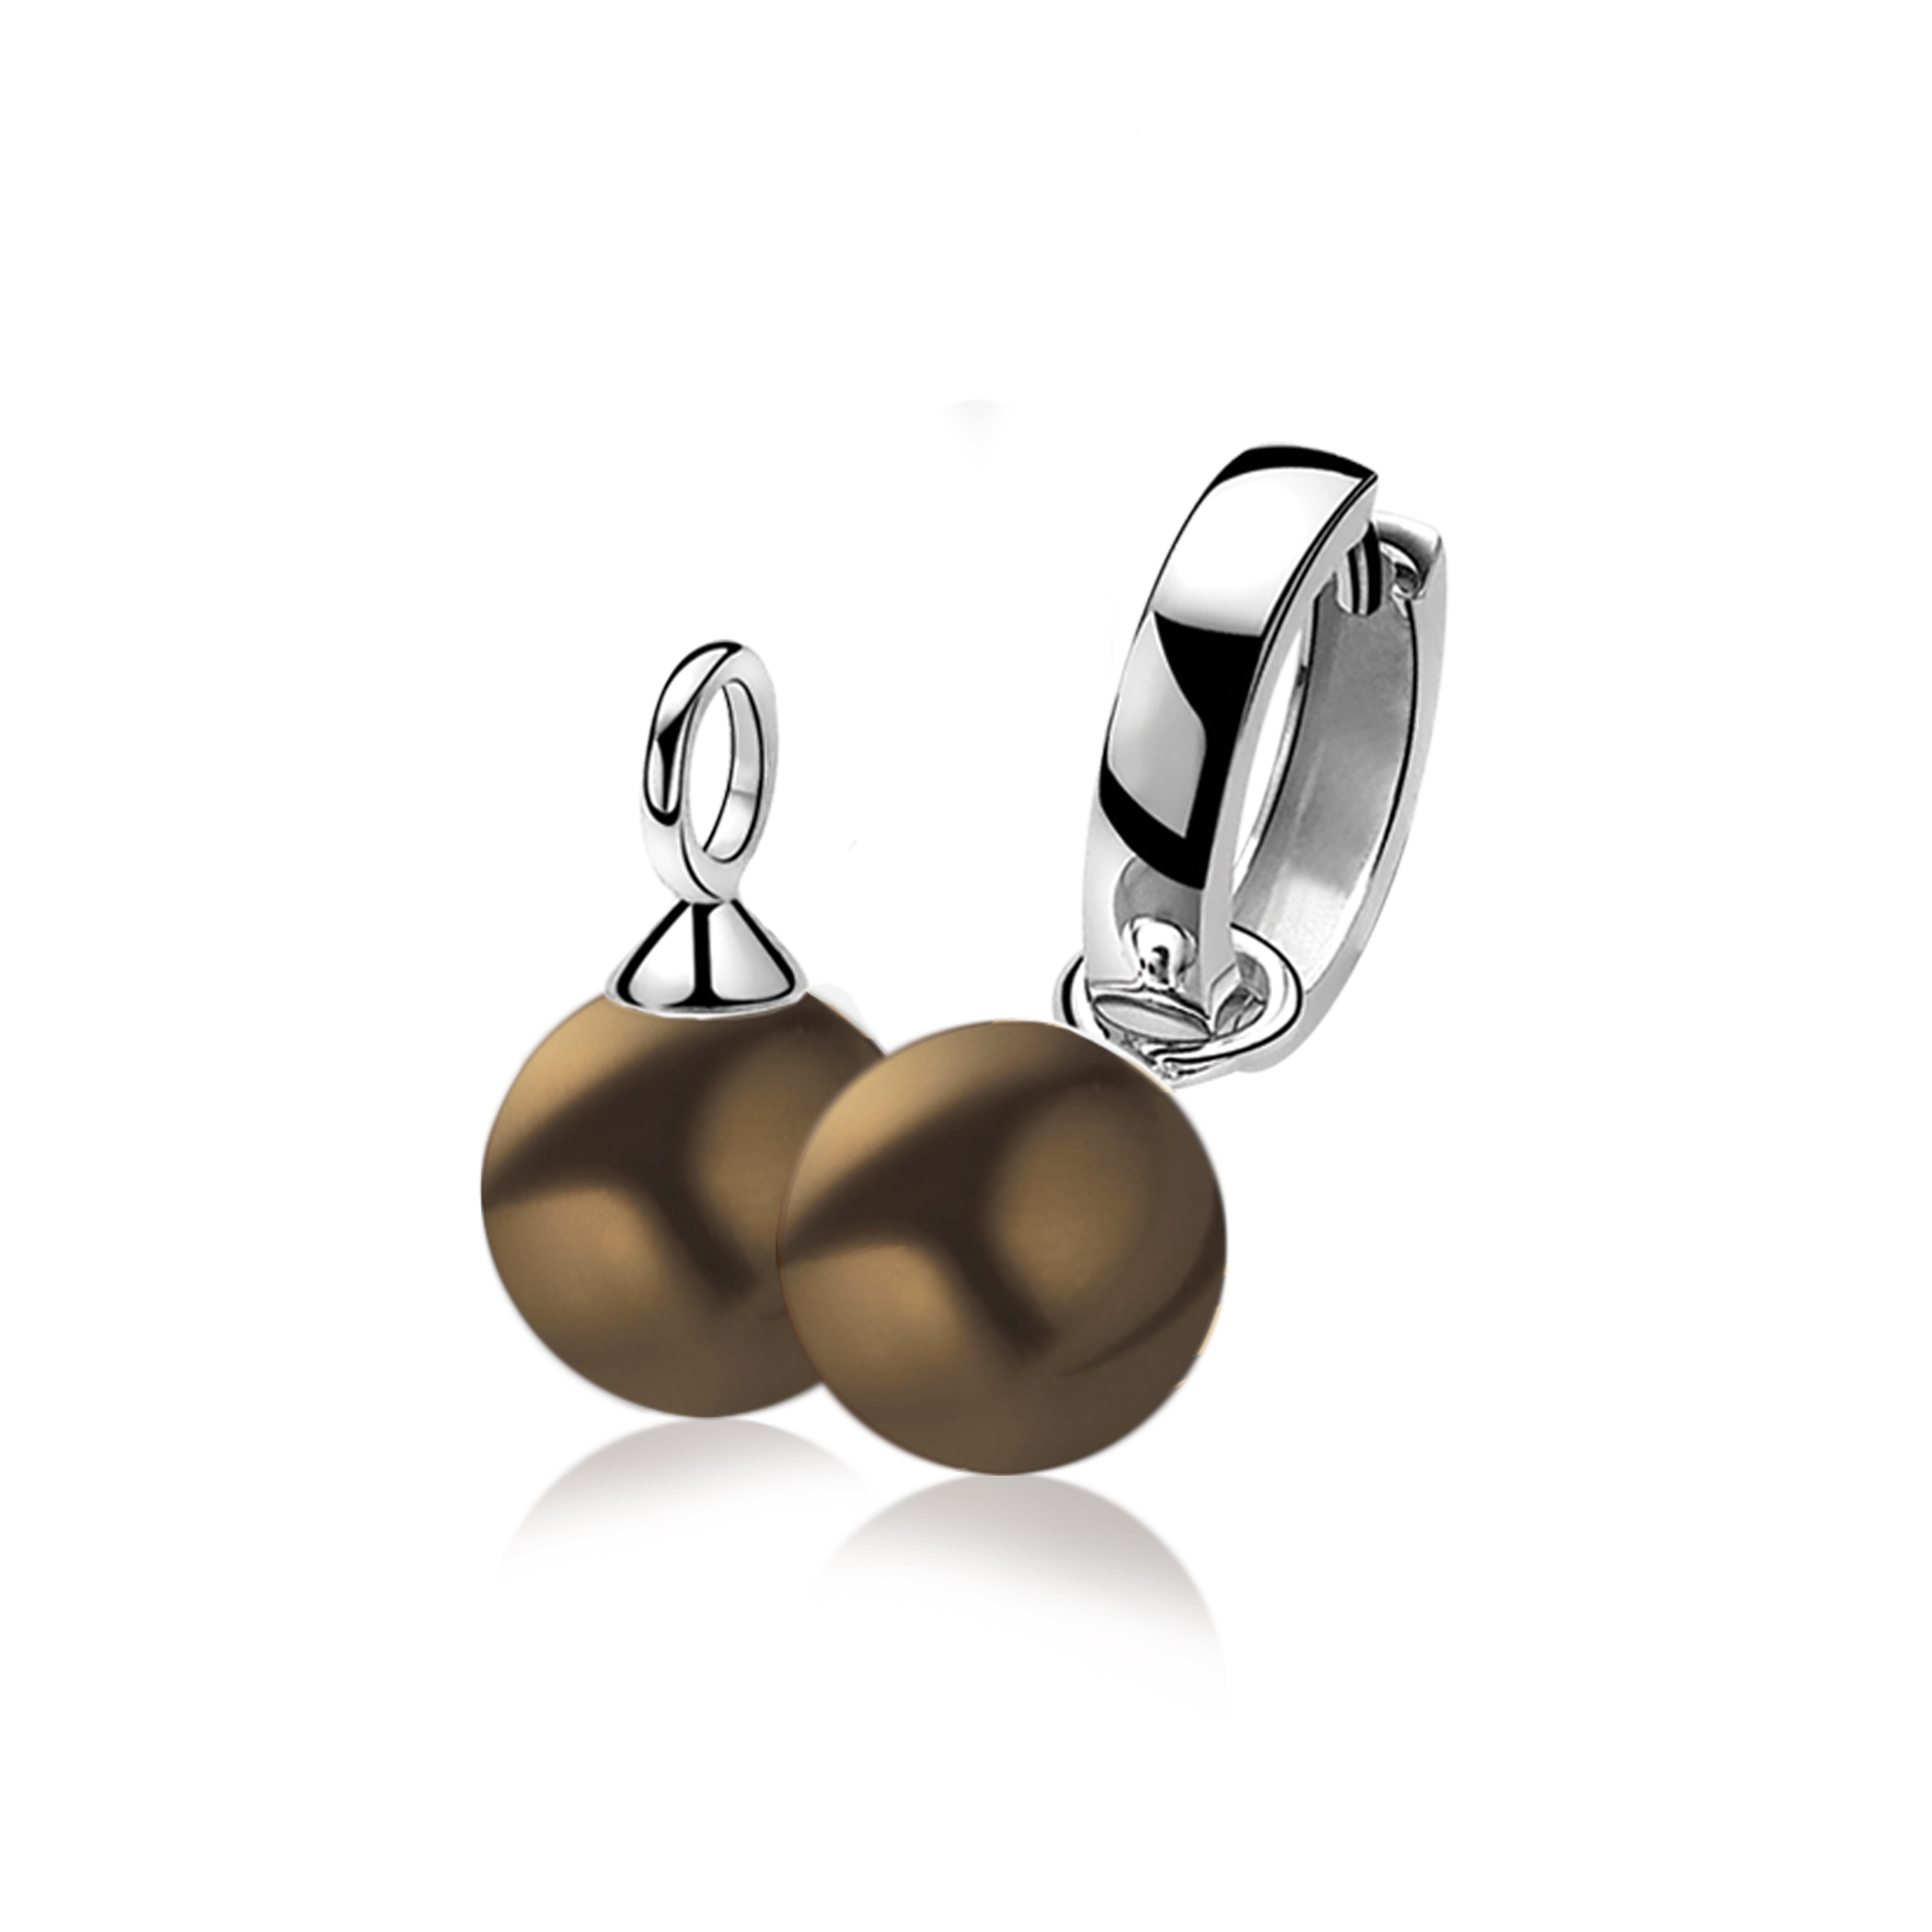 10mm ZINZI Sterling Silver Earrings Pendants Pearl Brown ZICH266BR (excl. hoop earrings)